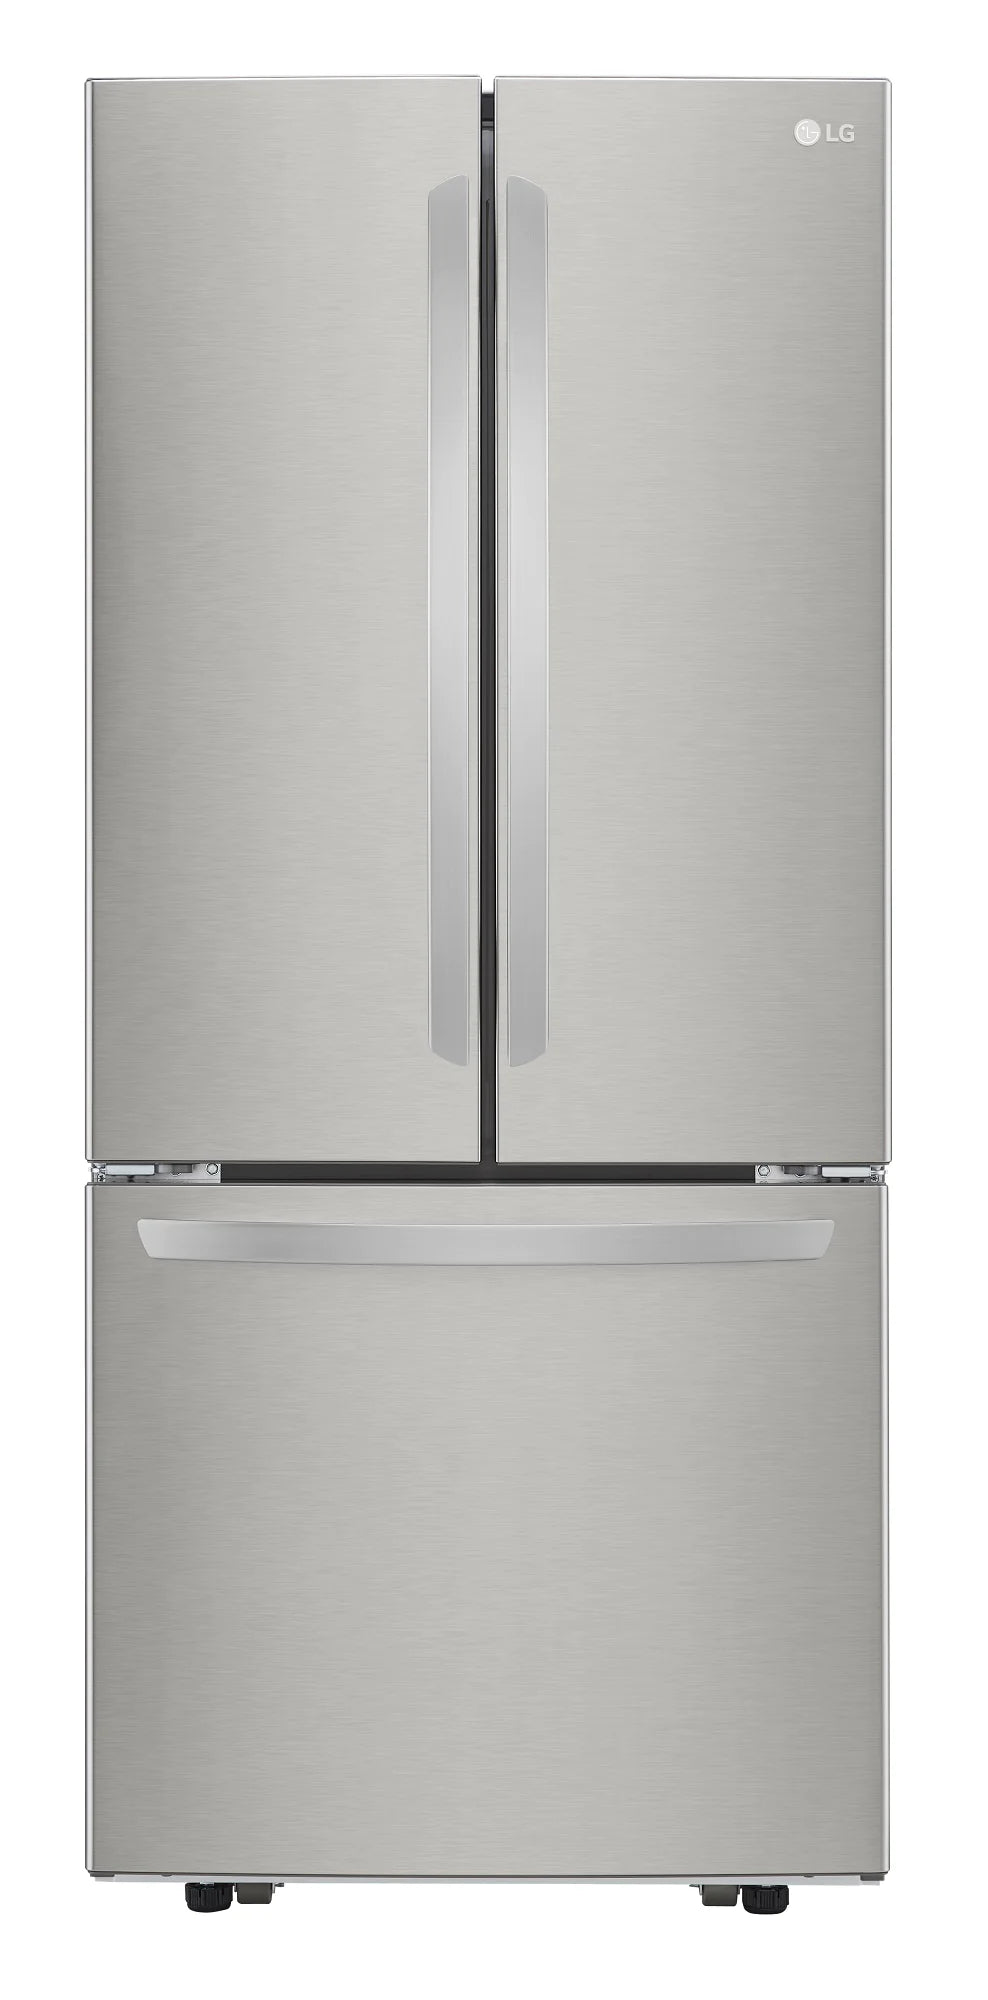 LG Refrigerator 30" Stainless Steel LRFNS2200S